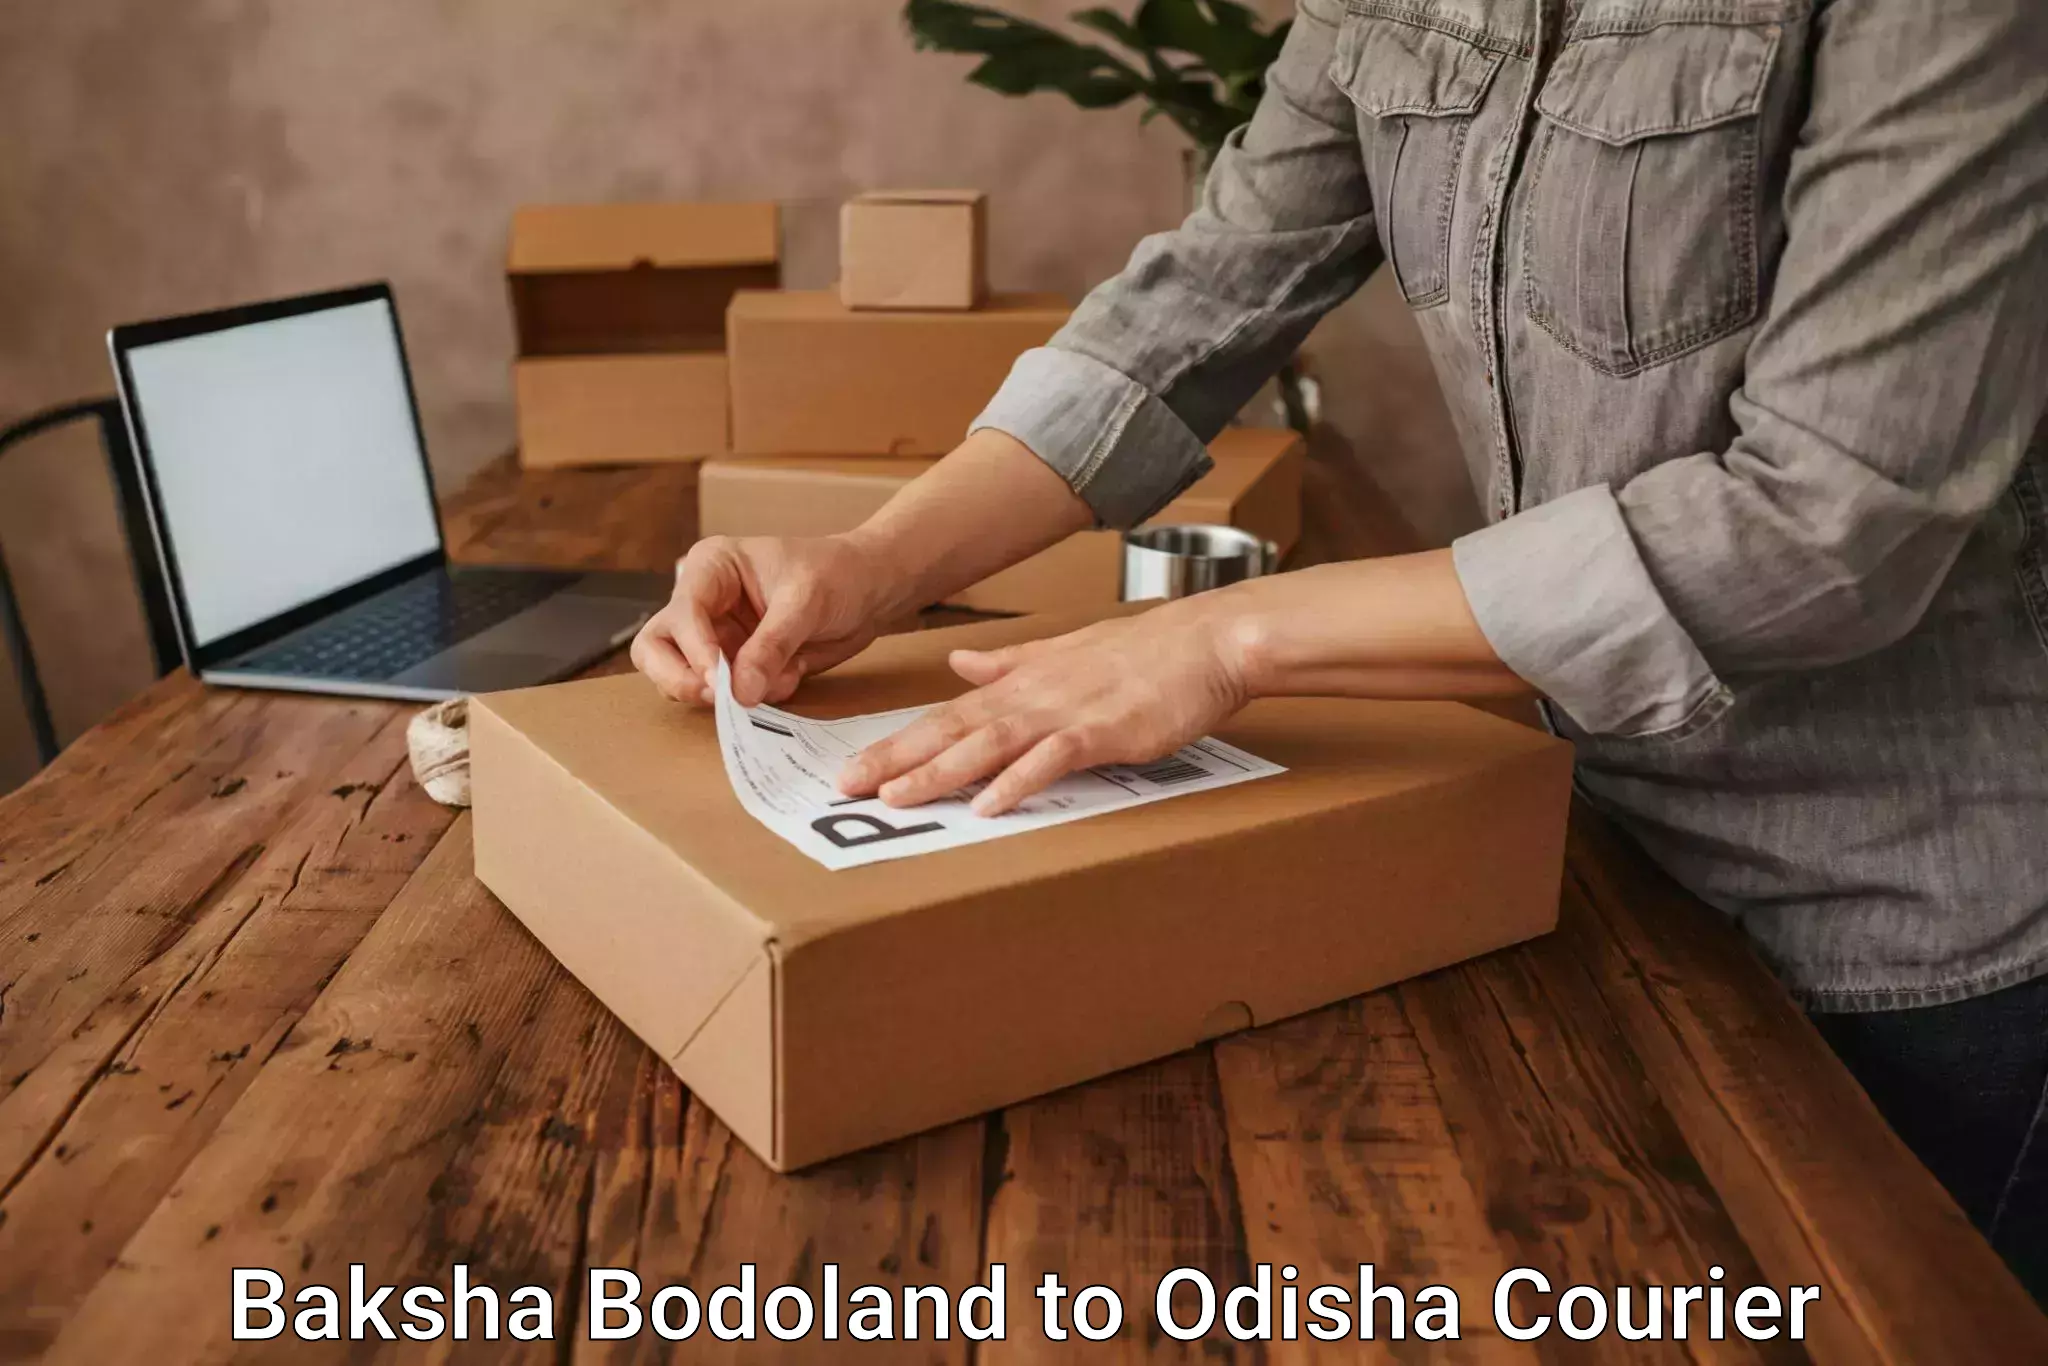 Urgent courier needs Baksha Bodoland to Chhendipada